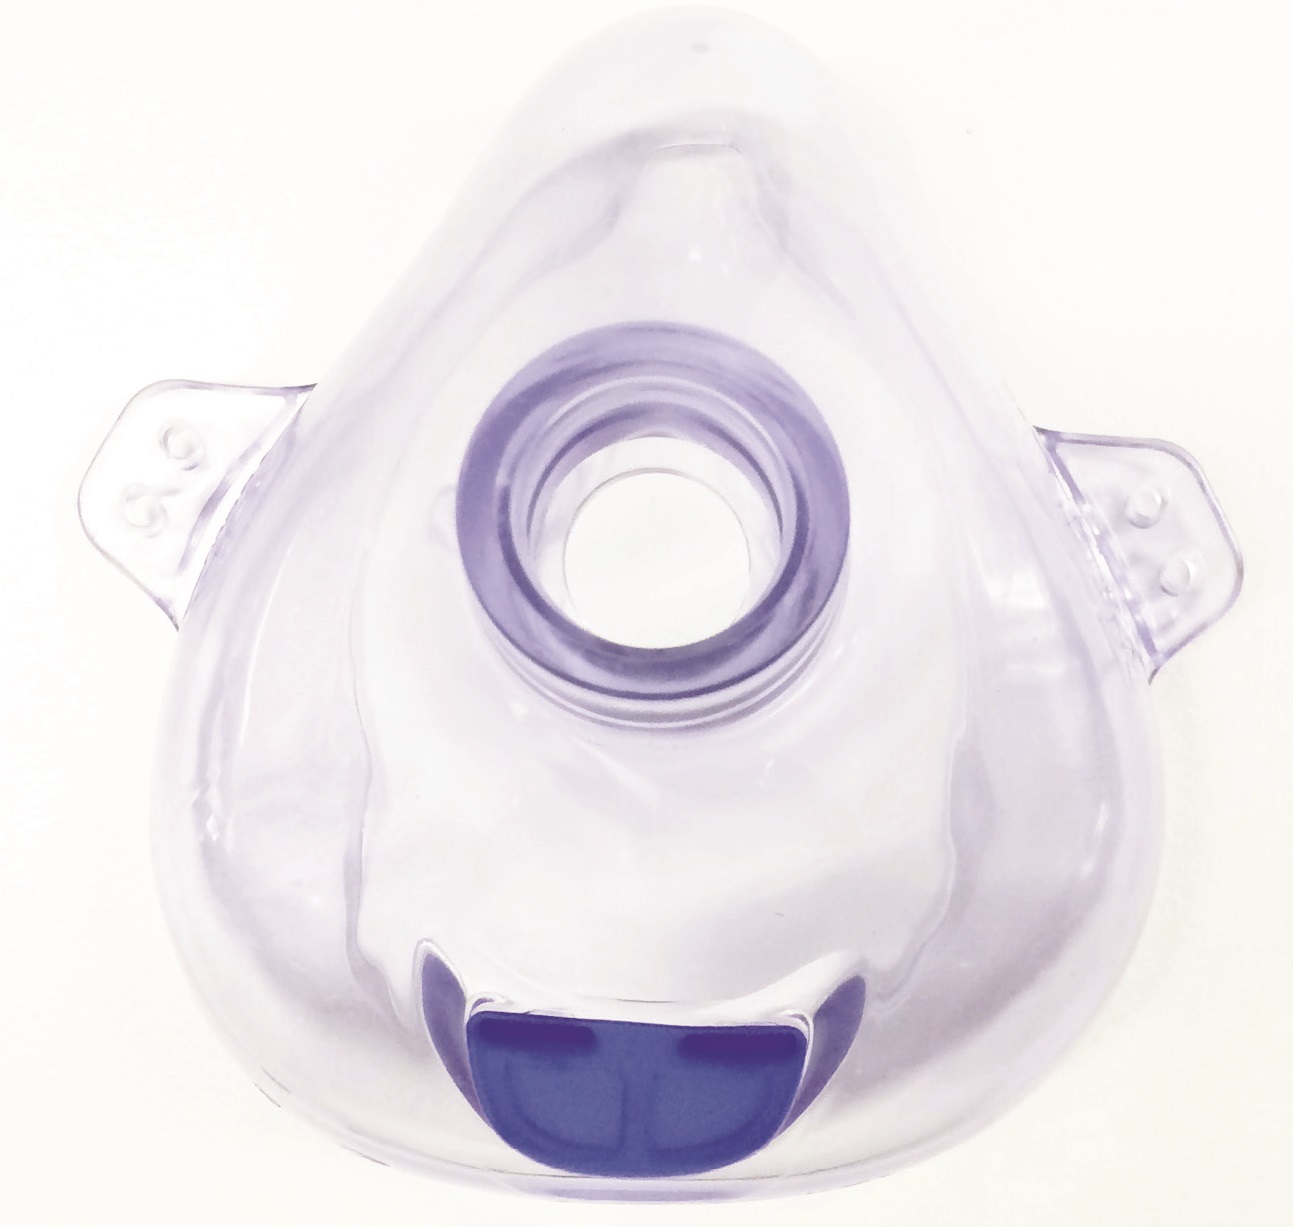 Breathe Eazy Spacer Mask - Adult Age 6+ image 0